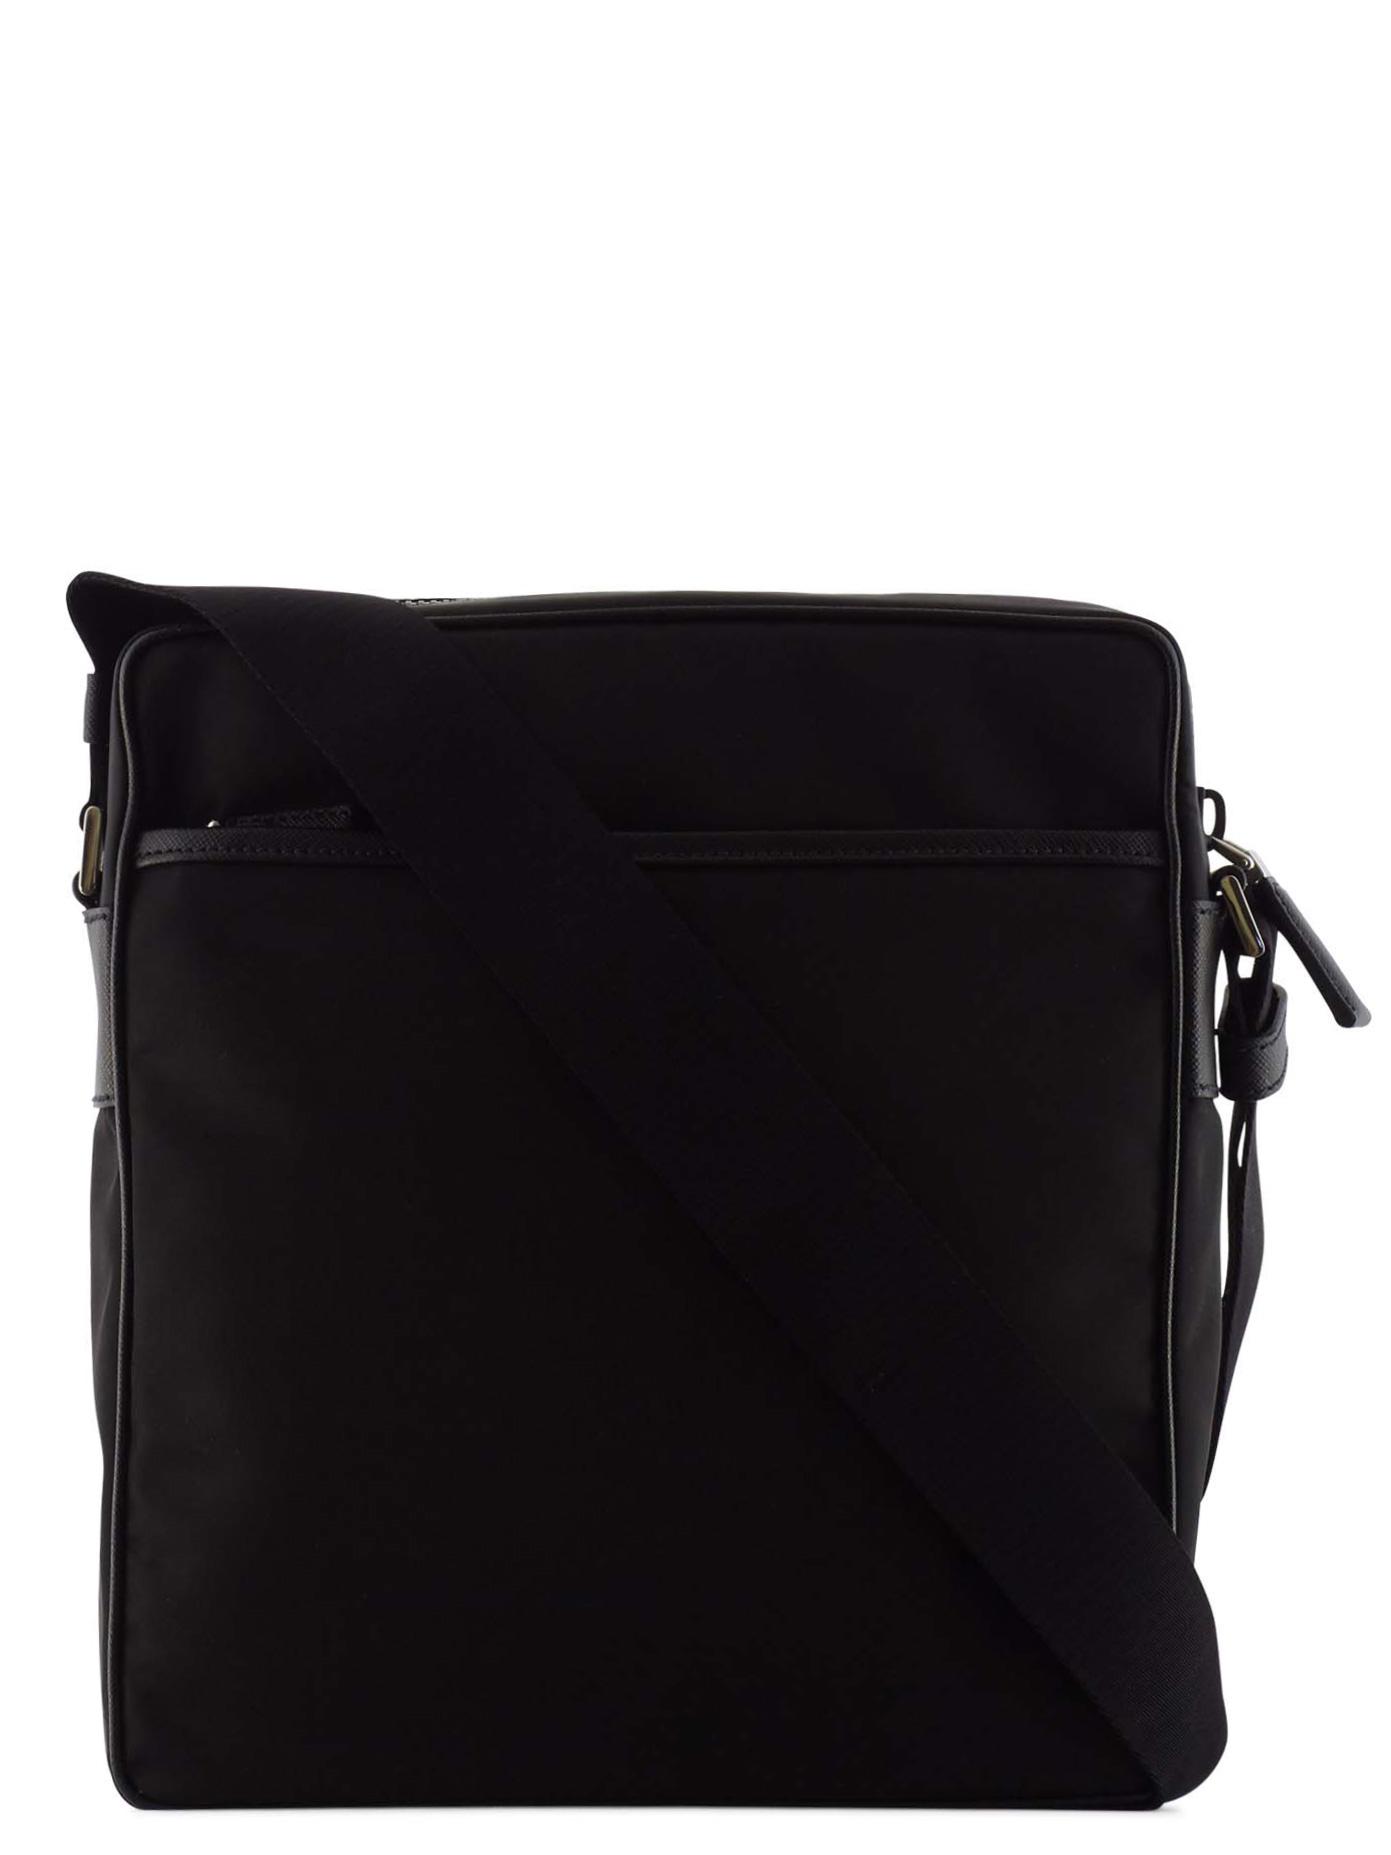 Lyst - Prada Nylon Crossbody Bag in Black for Men